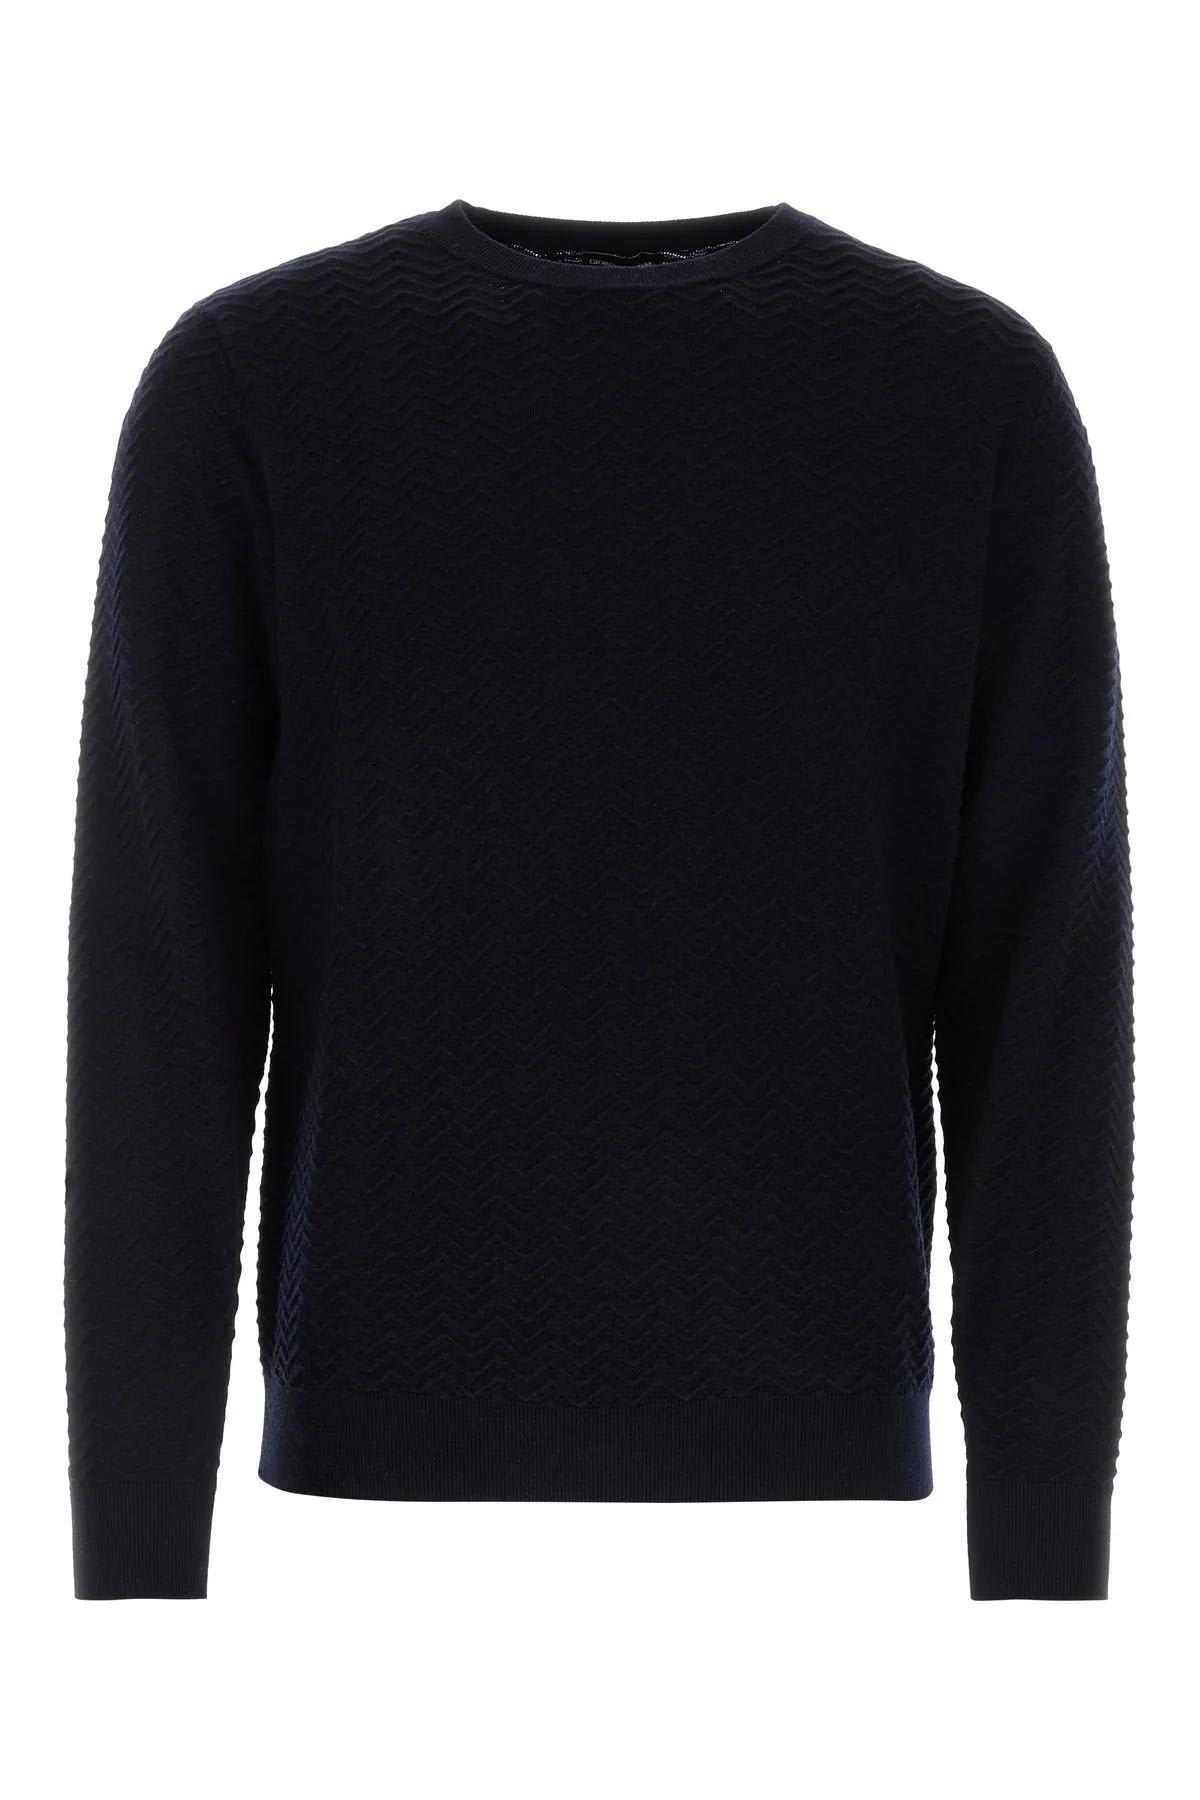 Midnight Blue Wool Blend Sweater